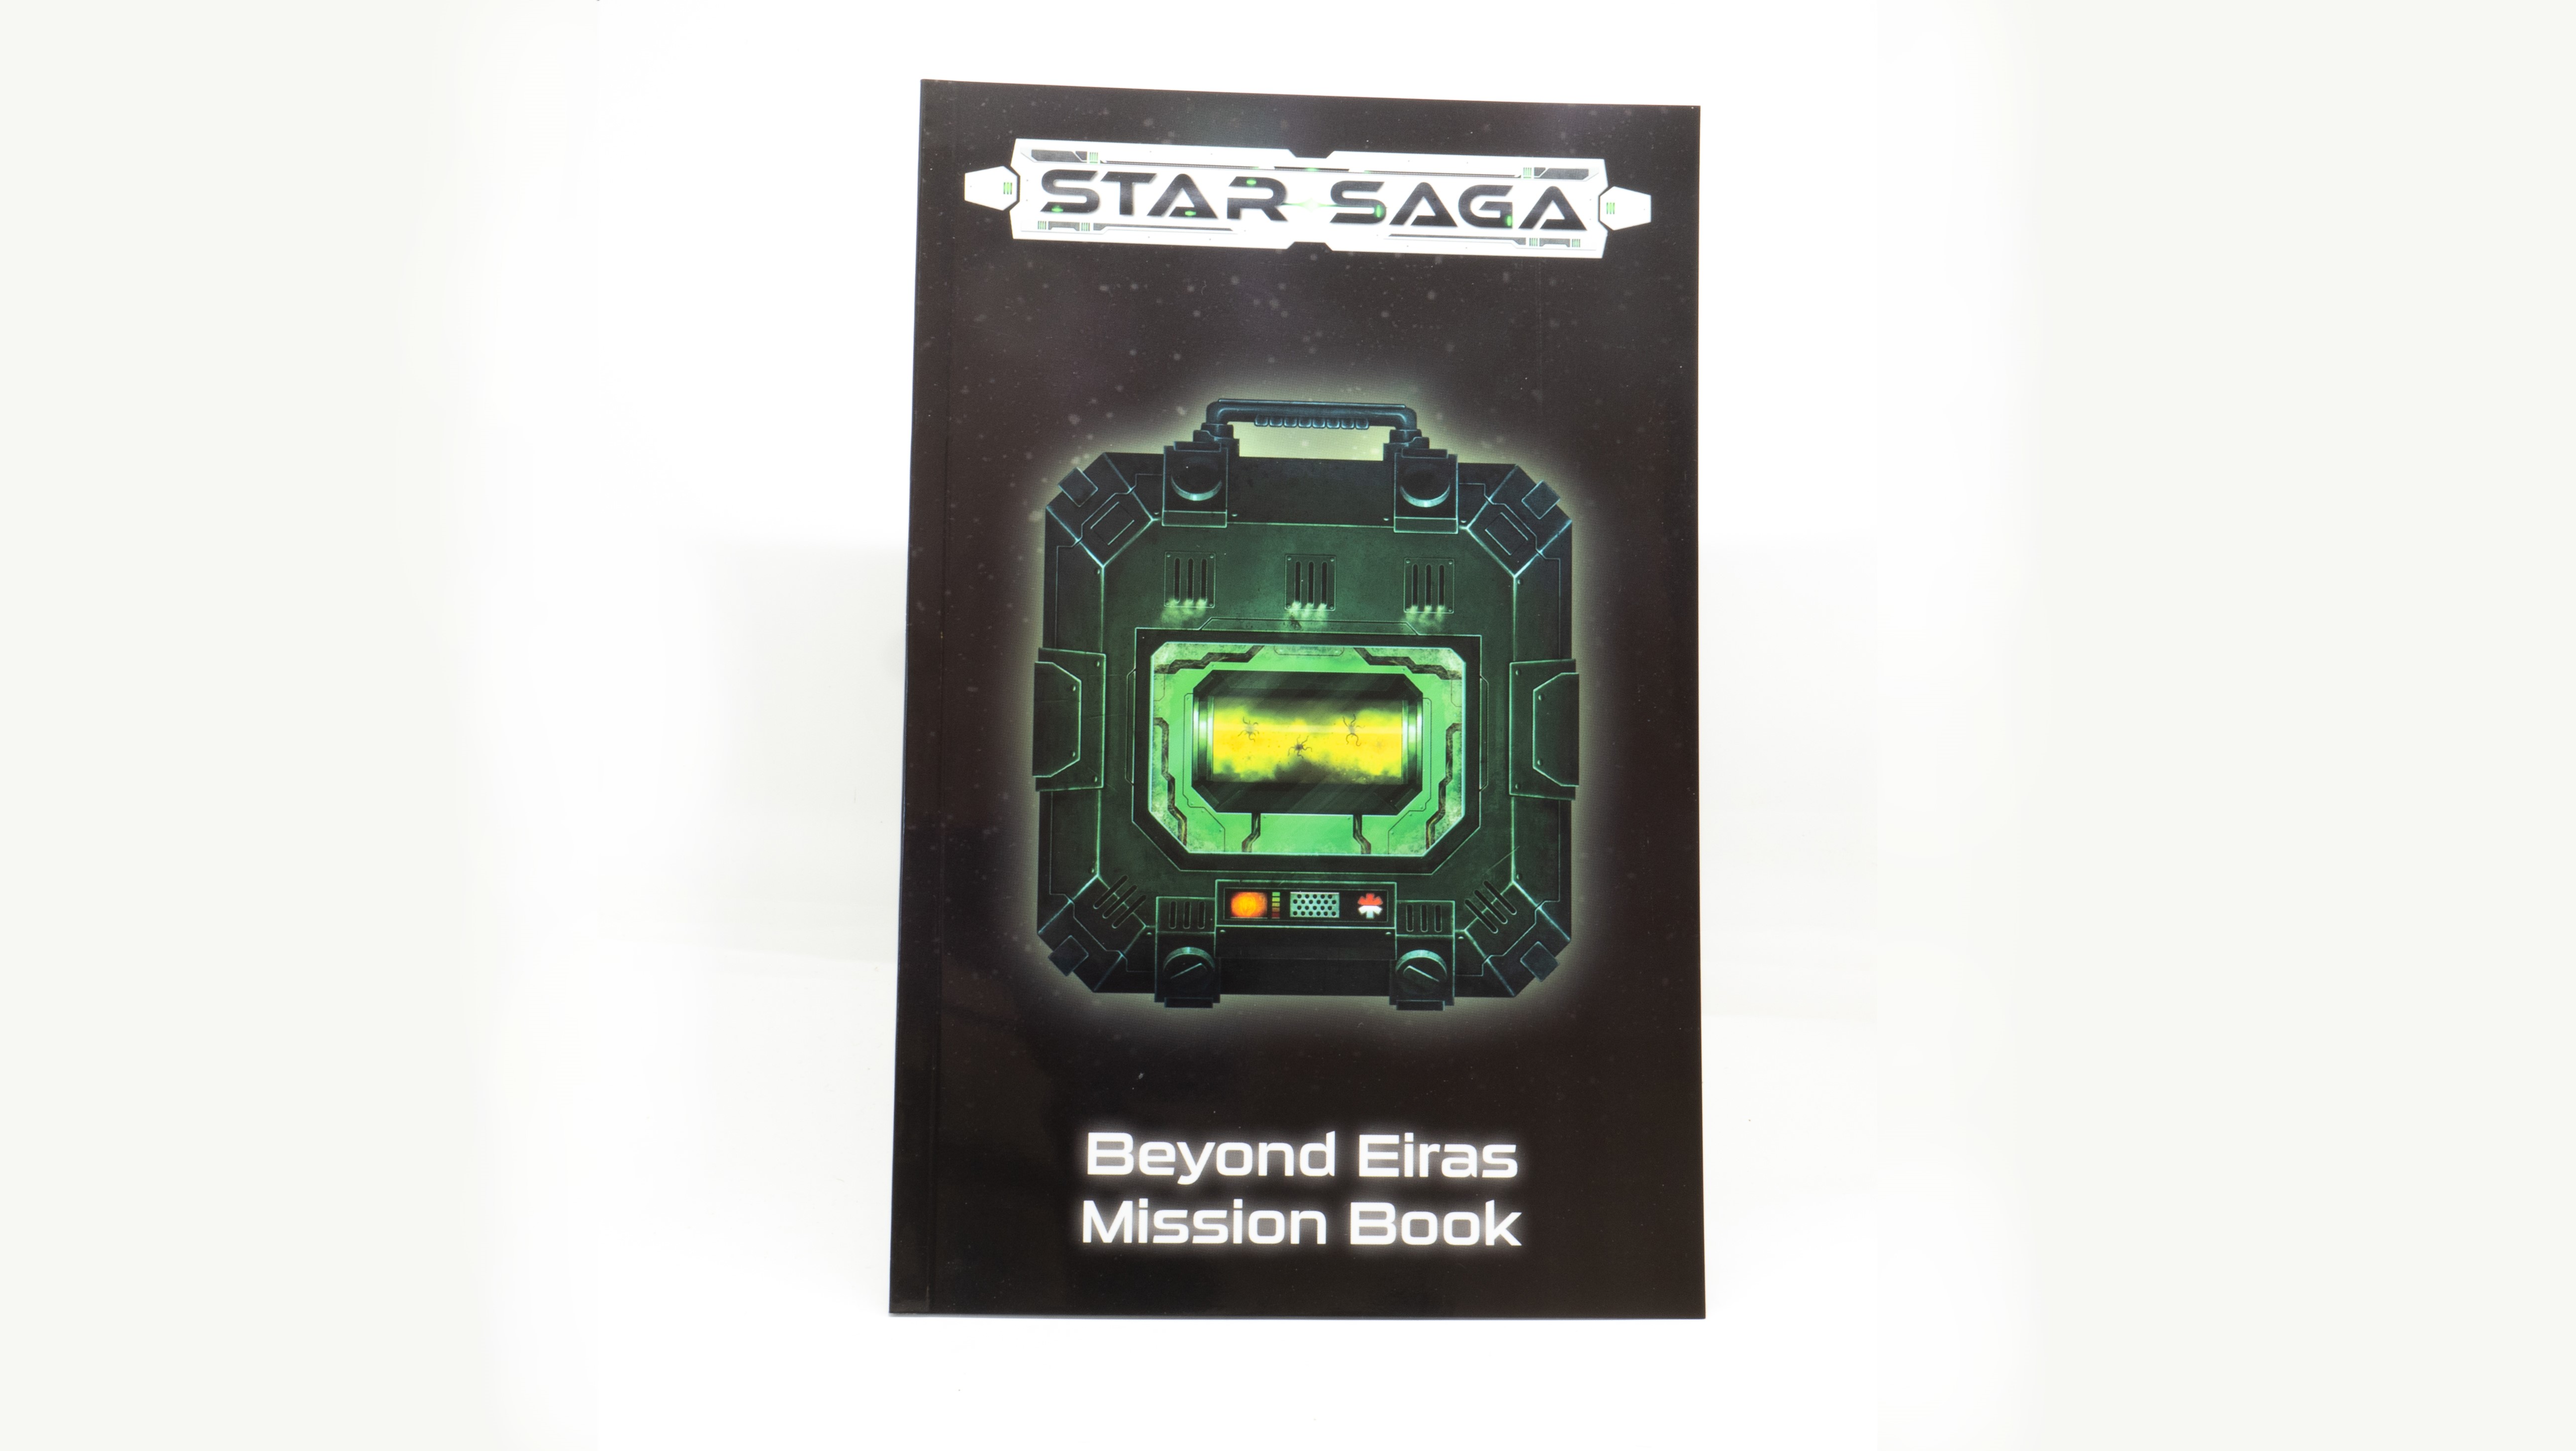 Star Saga Beyond Eiras Mission Book DIGITAL EDITION